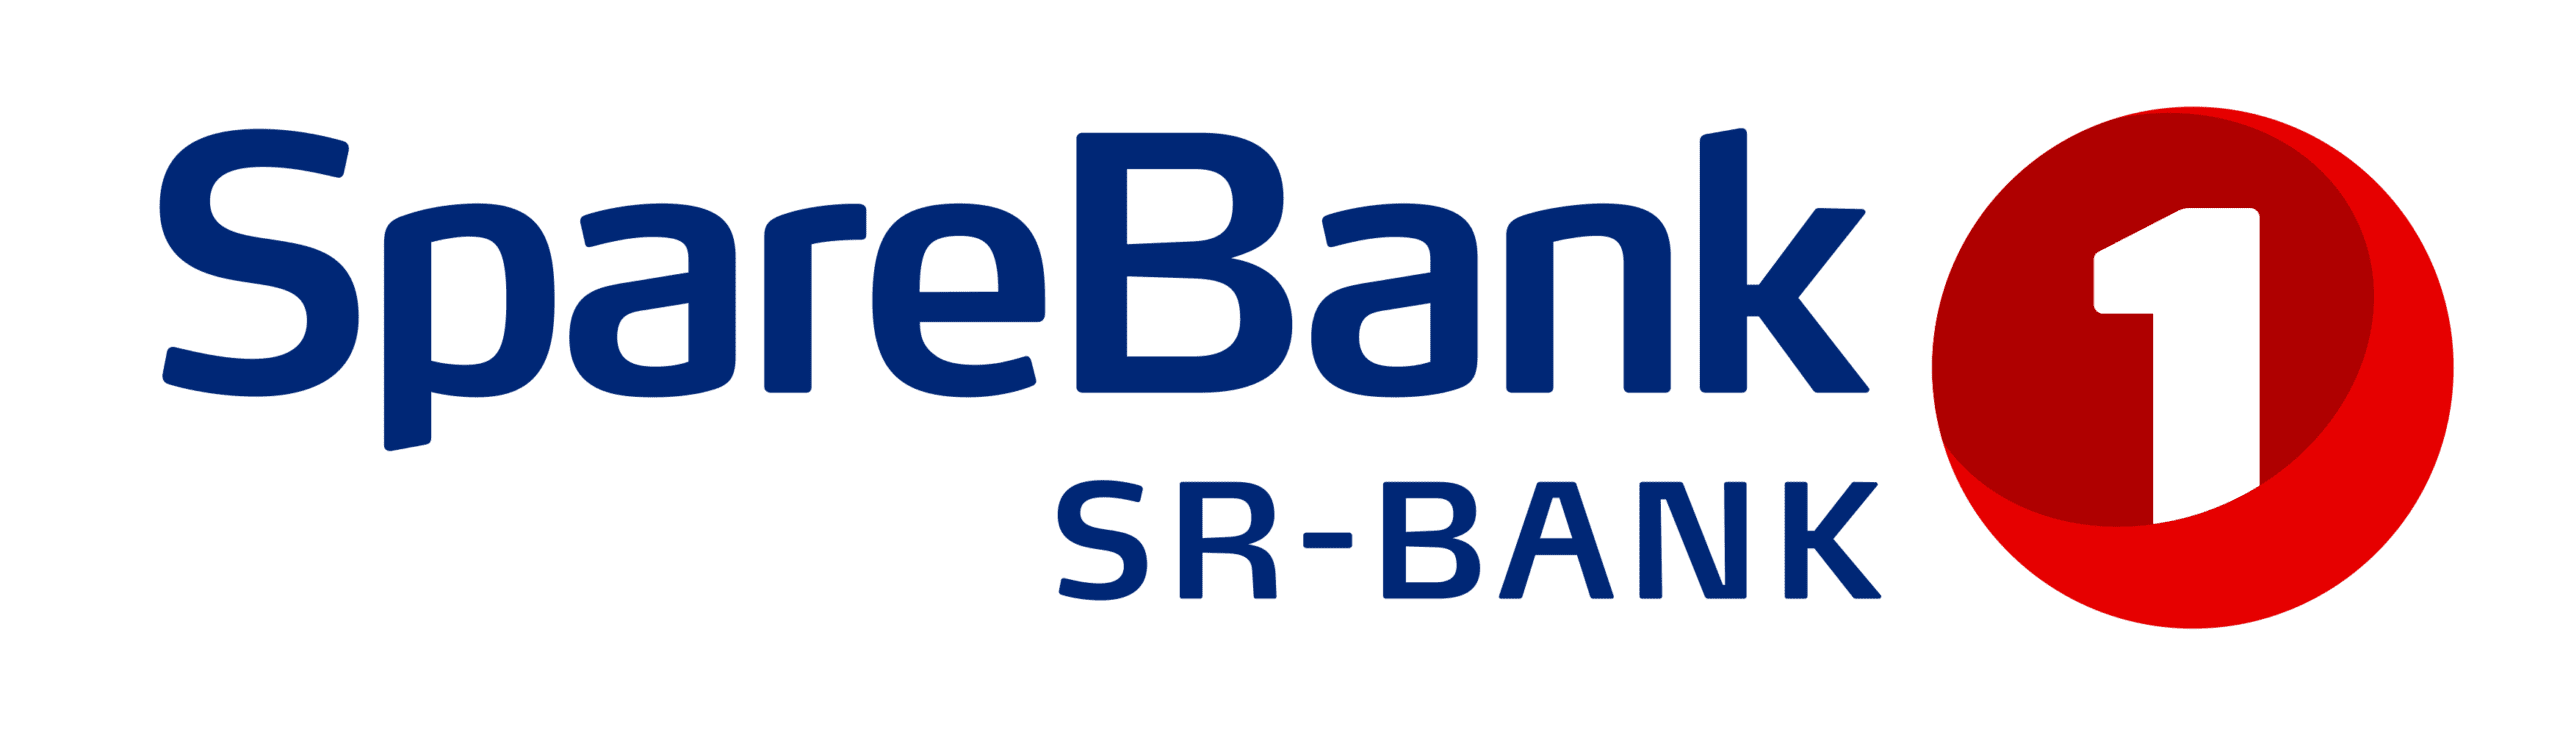 Sparebank 1 SR-Bank